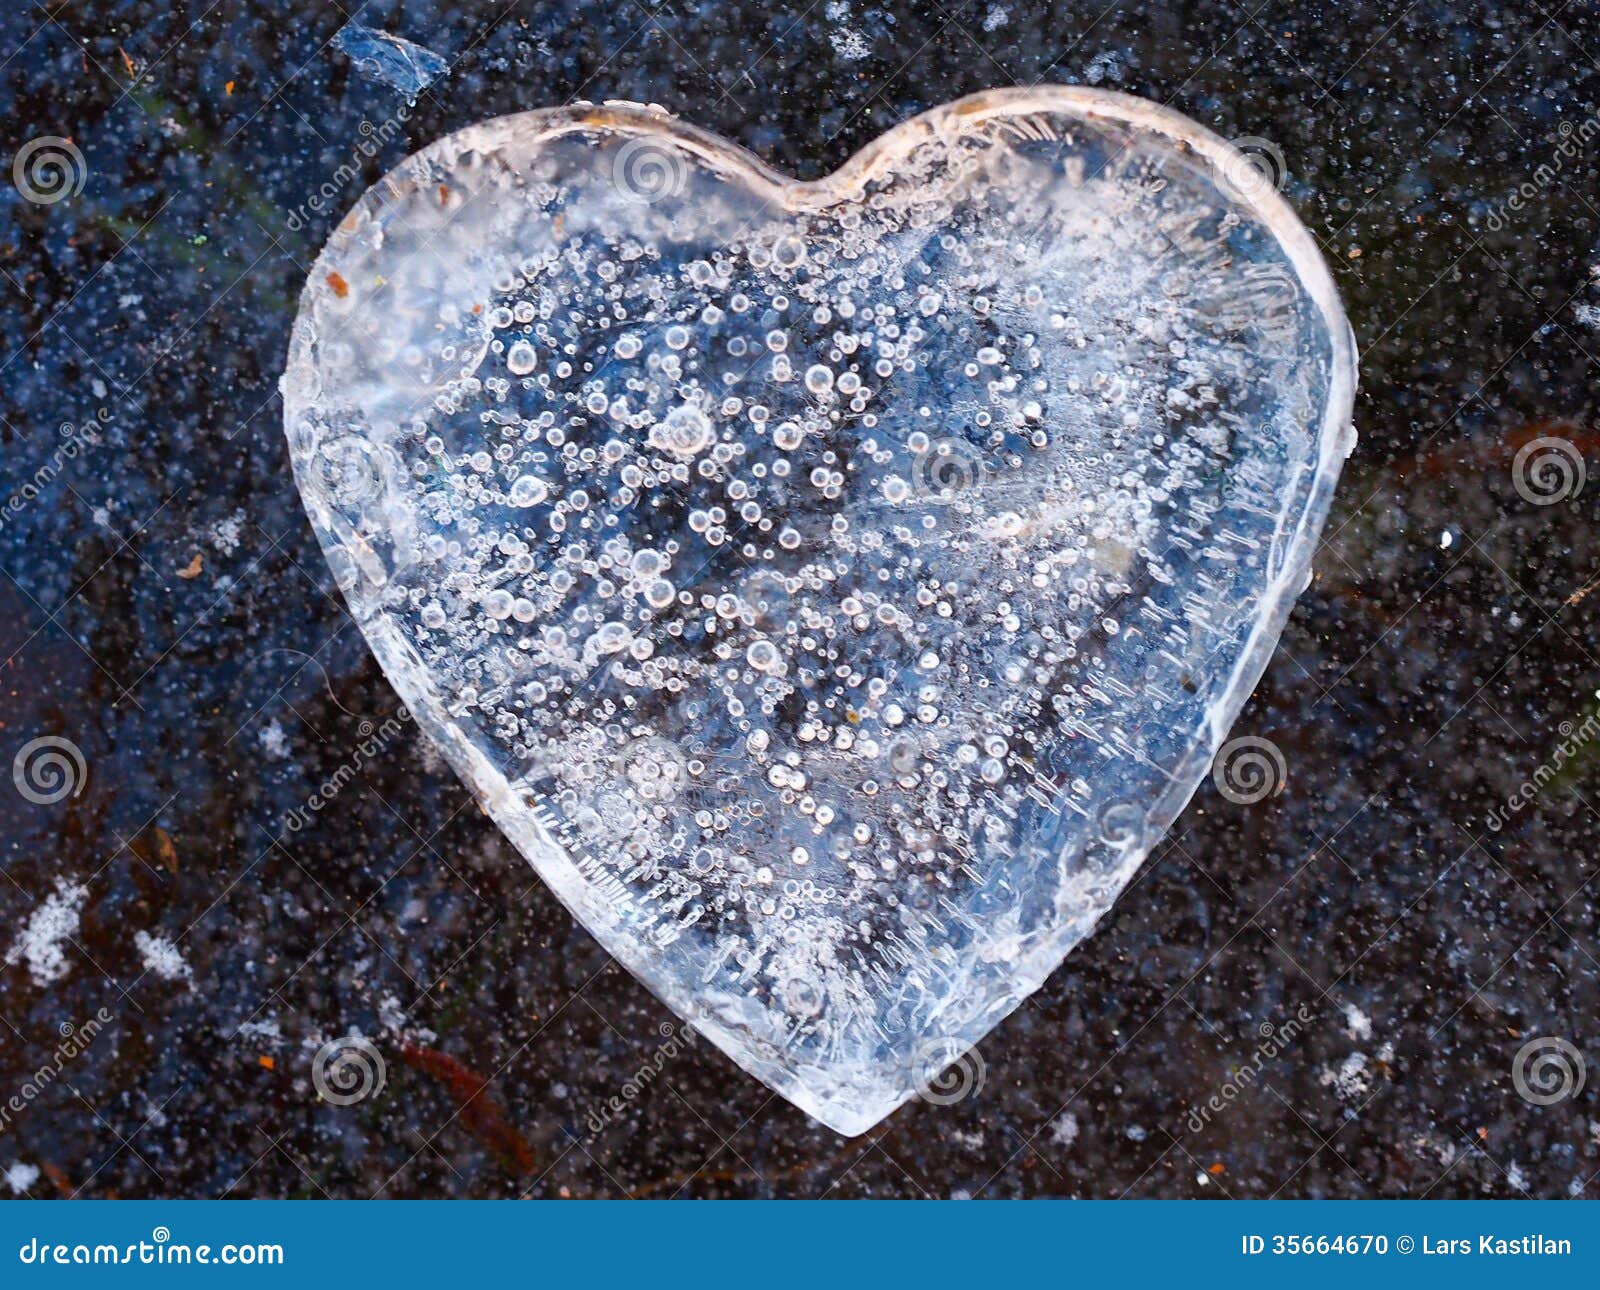 В тепле сердце в льдах. Сердце из льда. Сердце изо льда. Сердце во льду. Сердце во льду картинки.